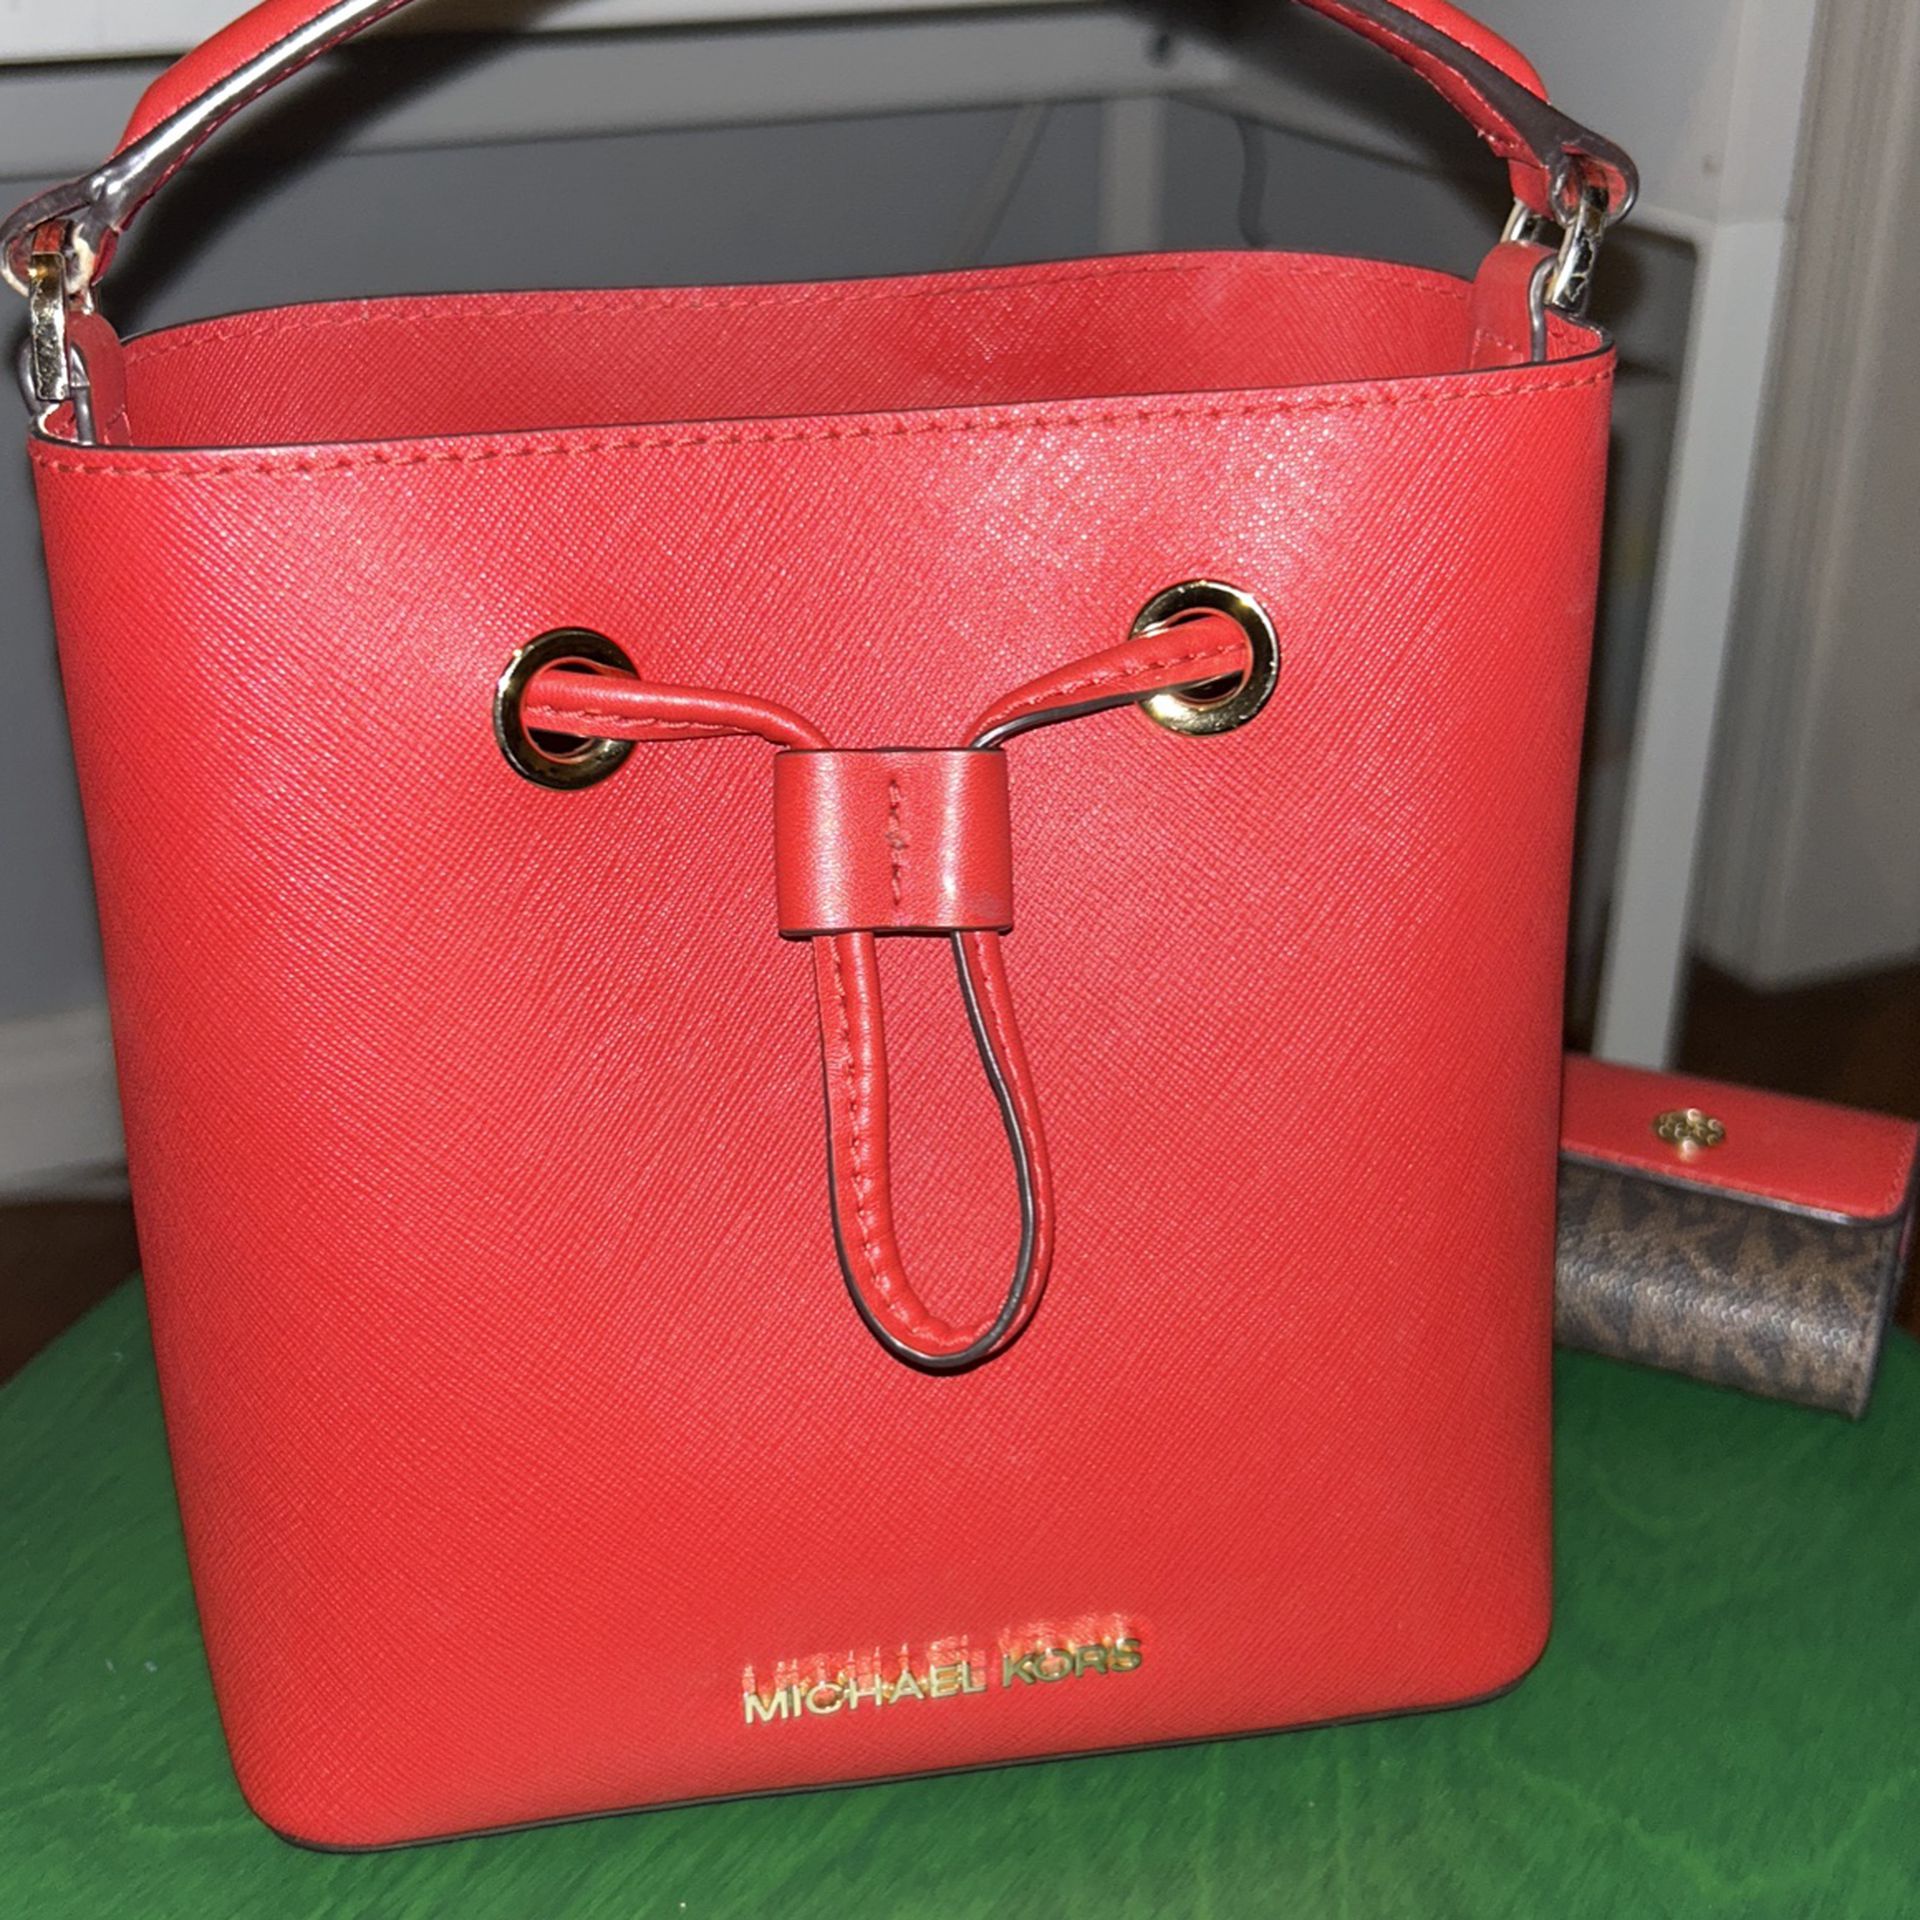 Michael Kors Bucket Bag purse - Red